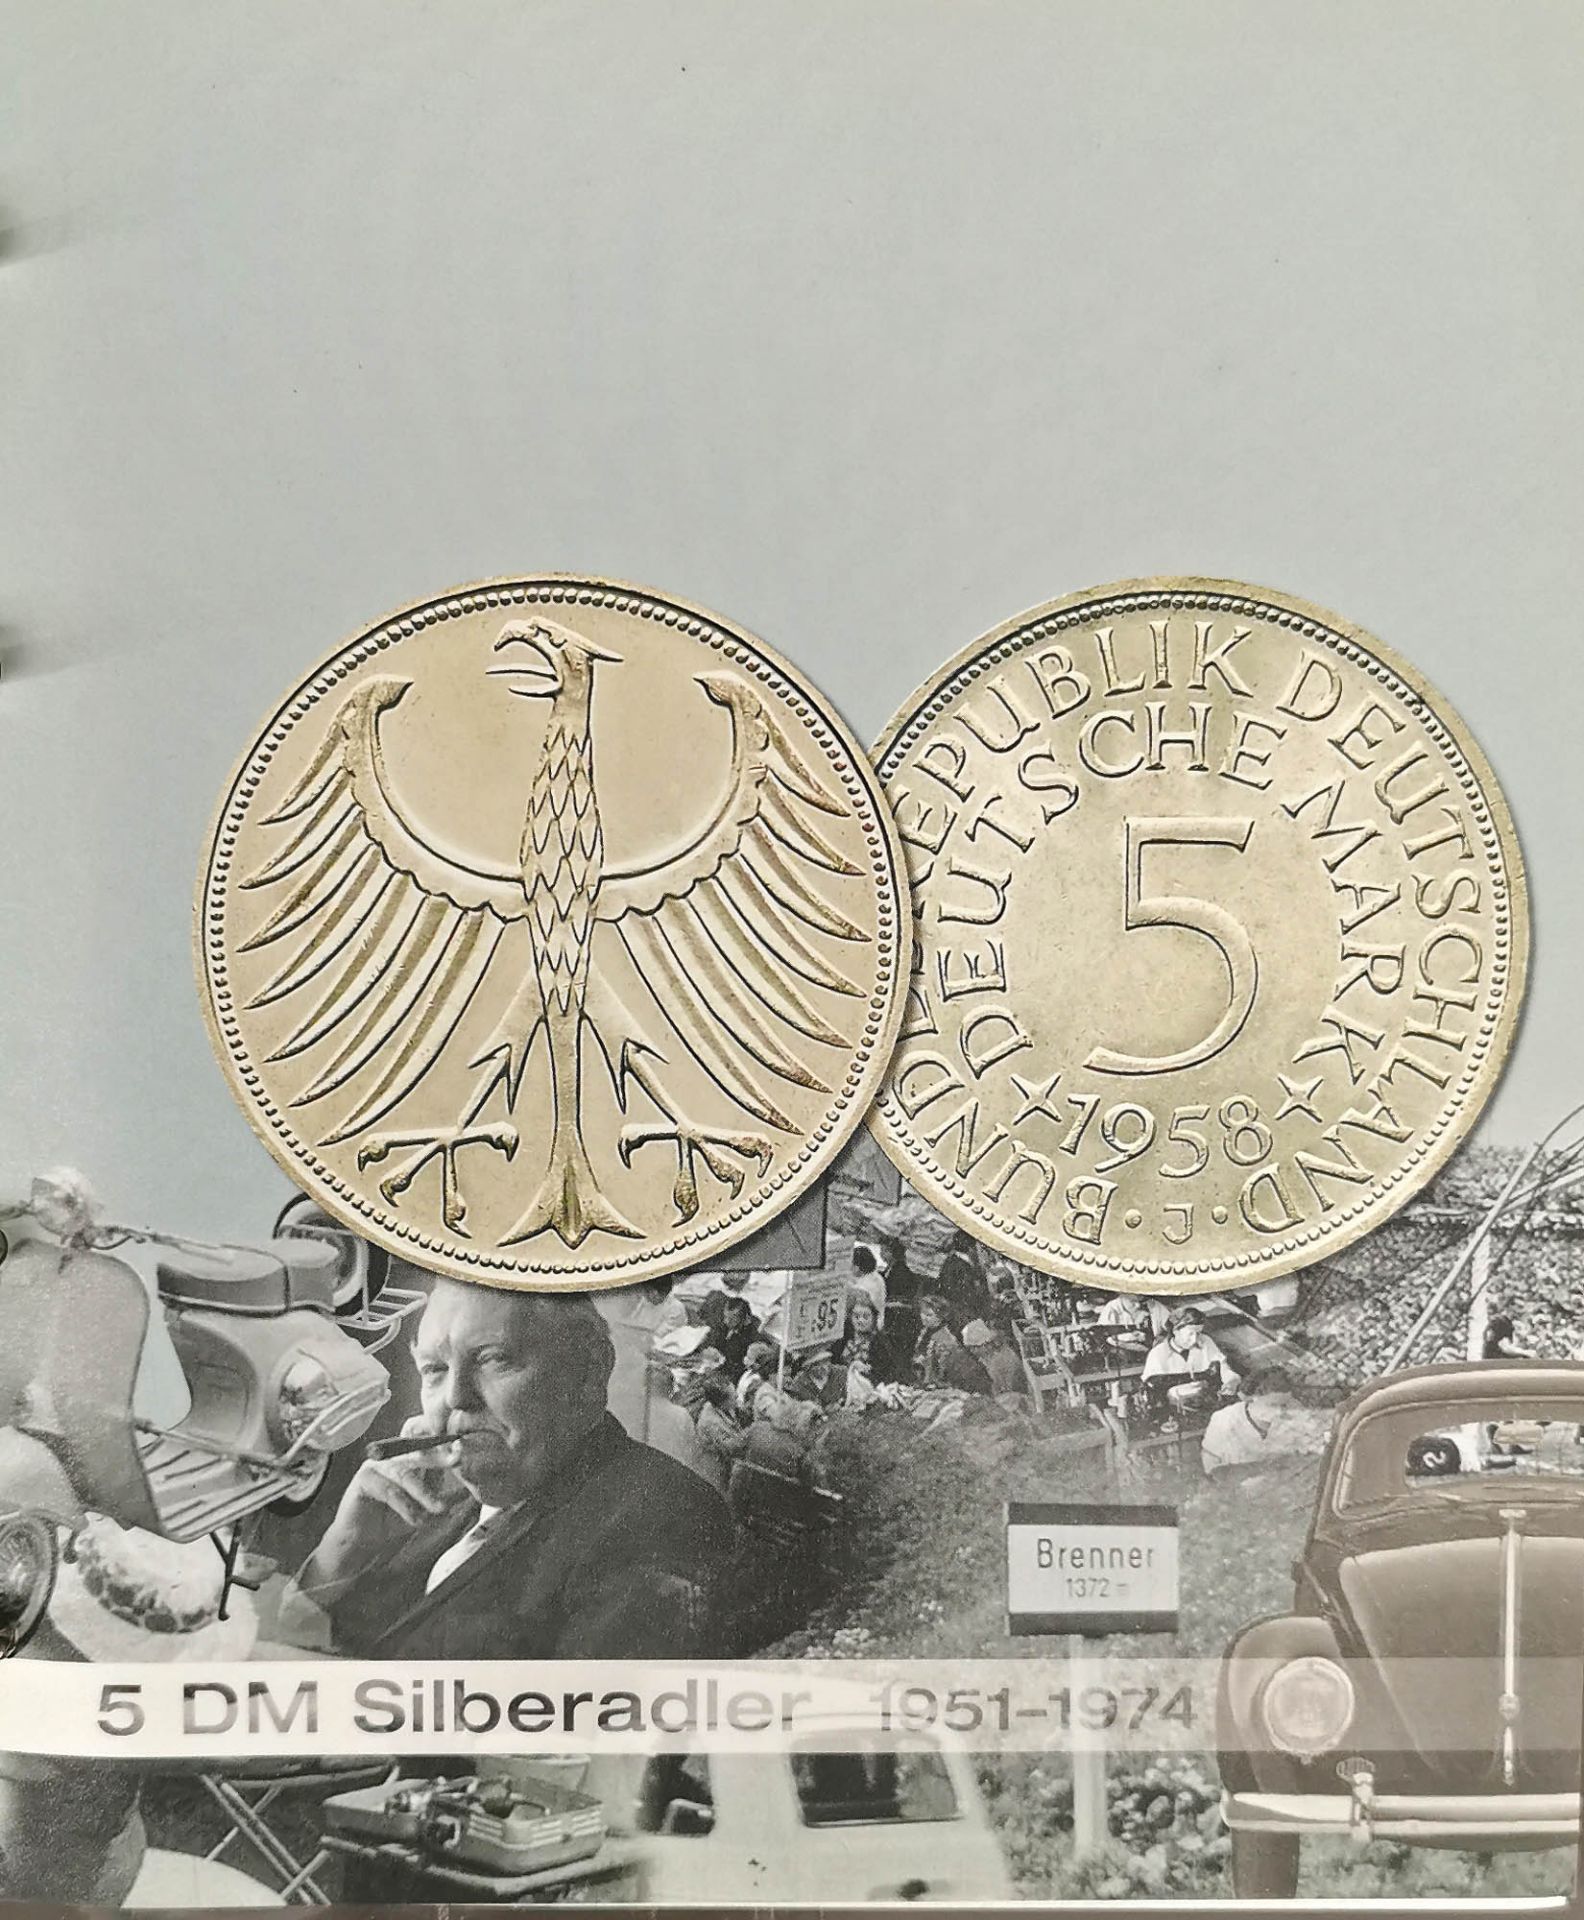 Sammlung 5 DM Silberadler - Image 5 of 8